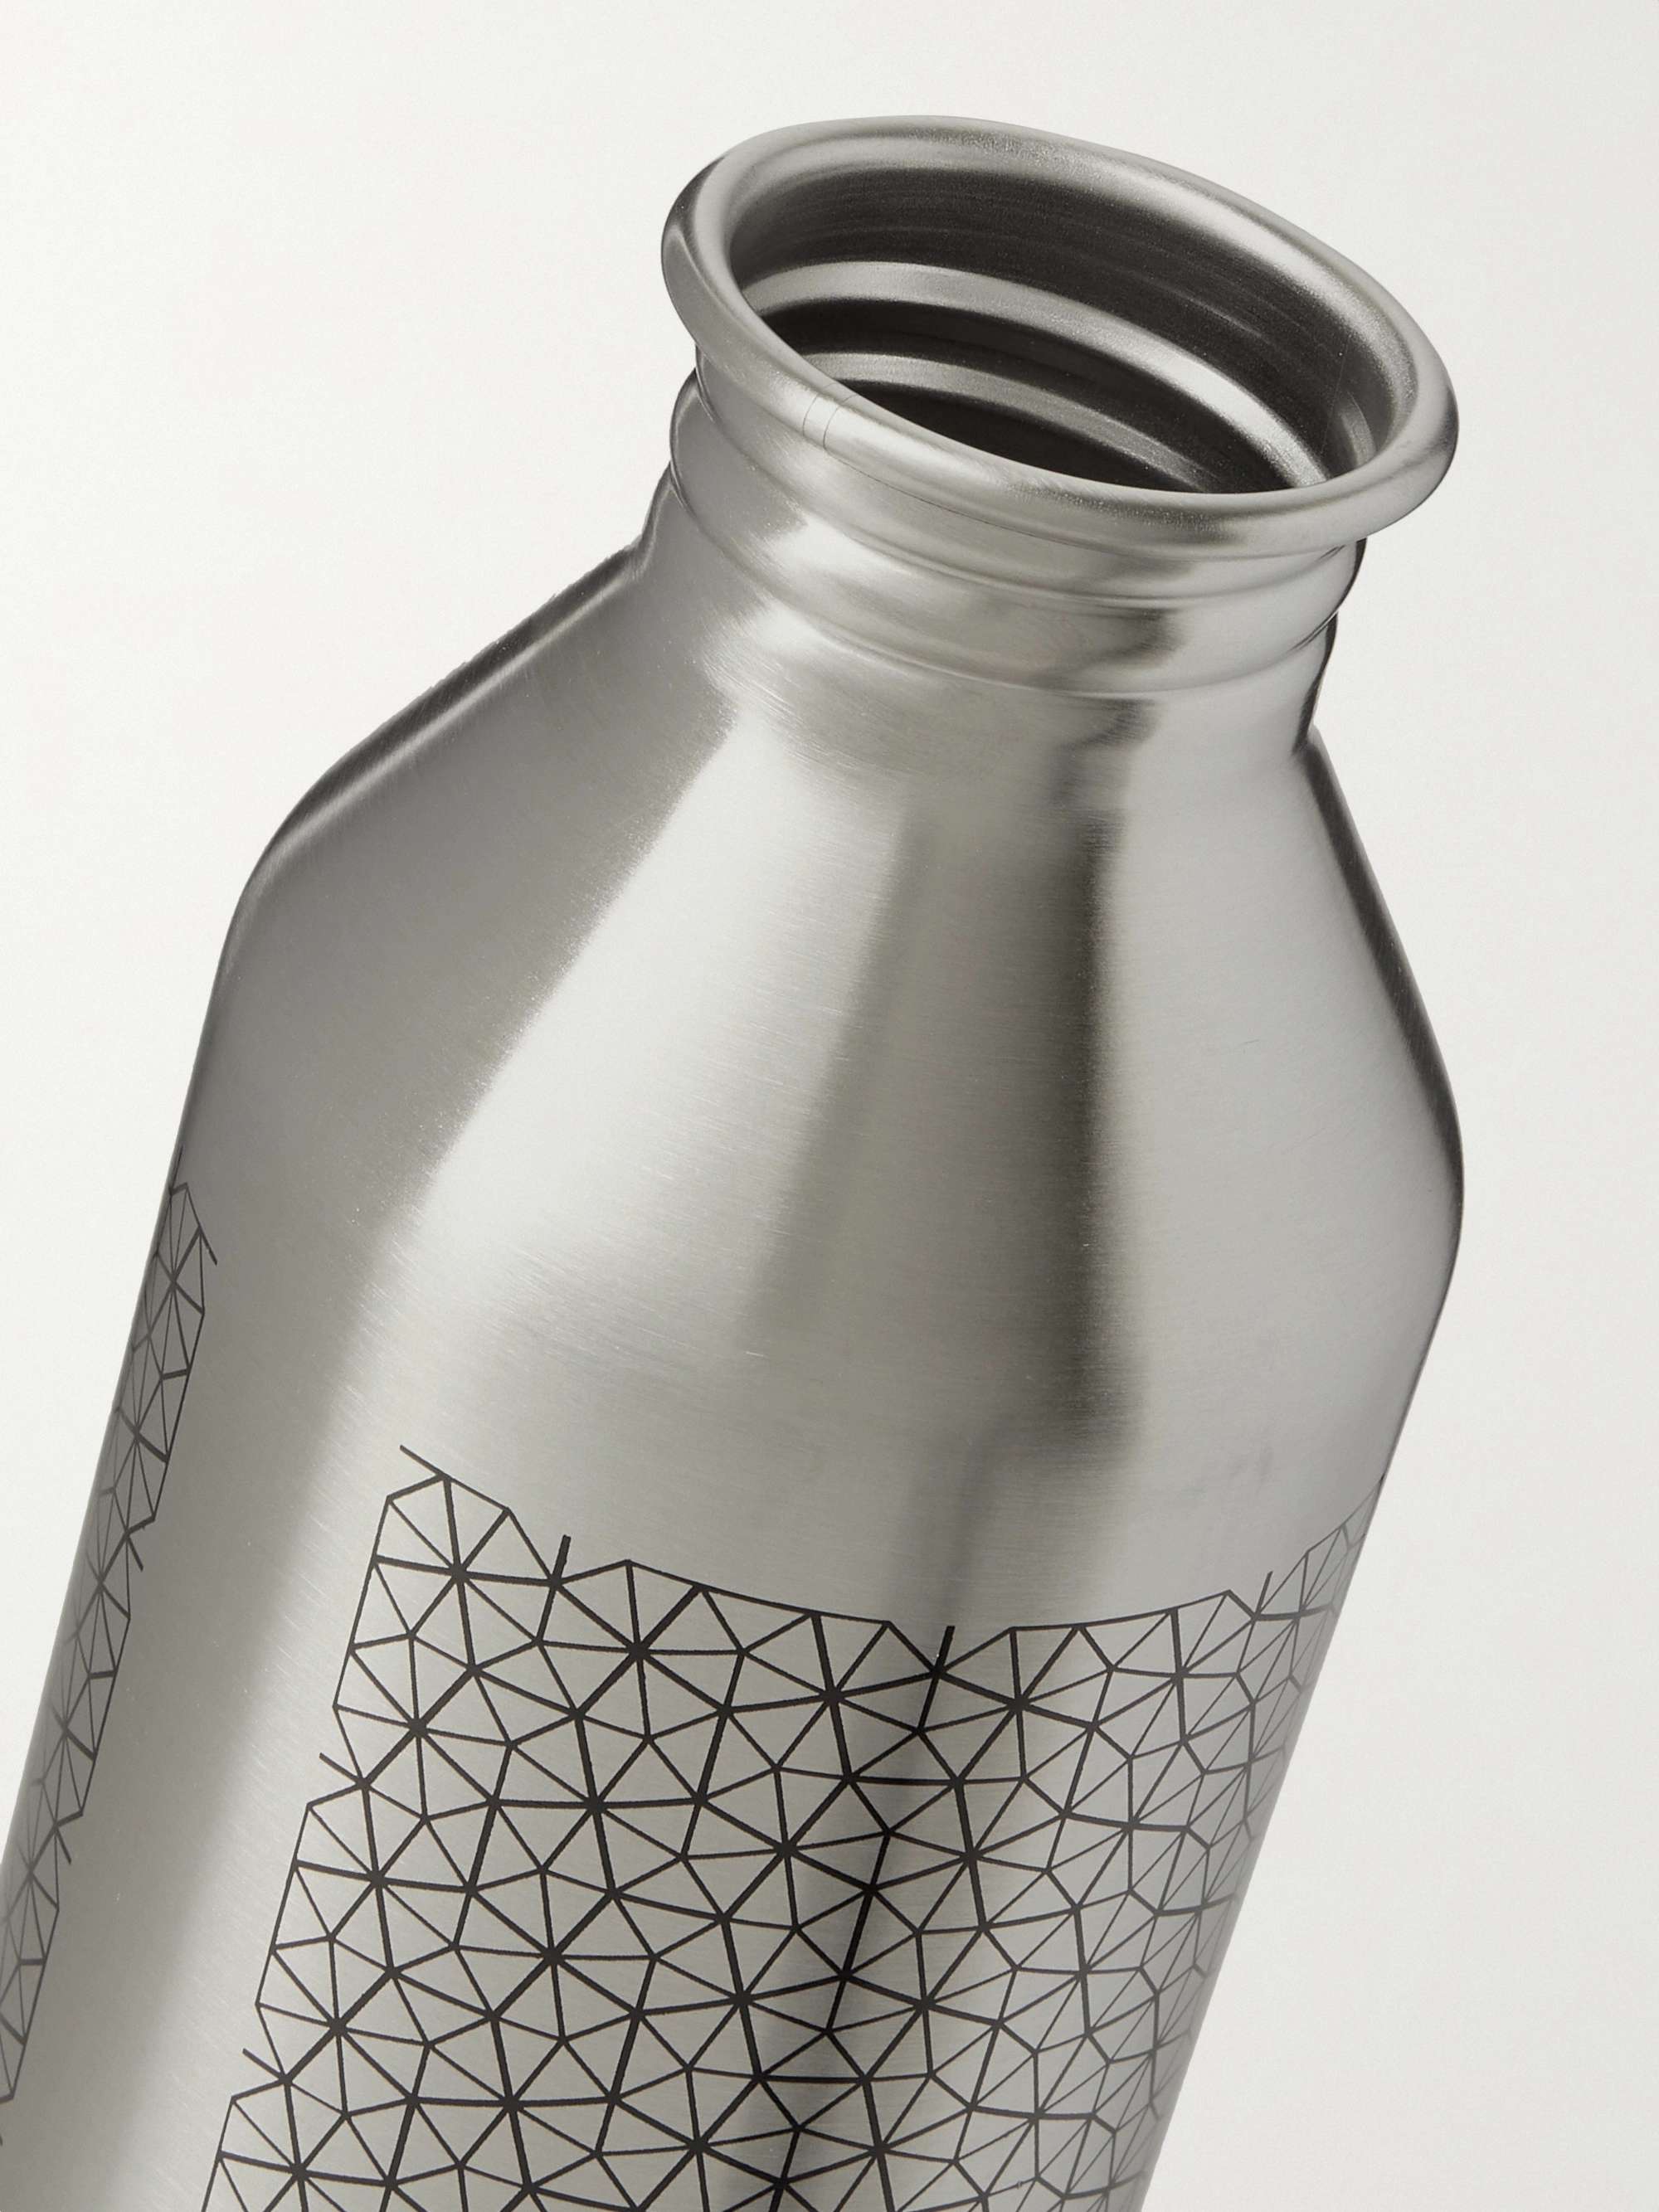 HEIMPLANET Printed Stainless Steel Water Bottle, 750ml